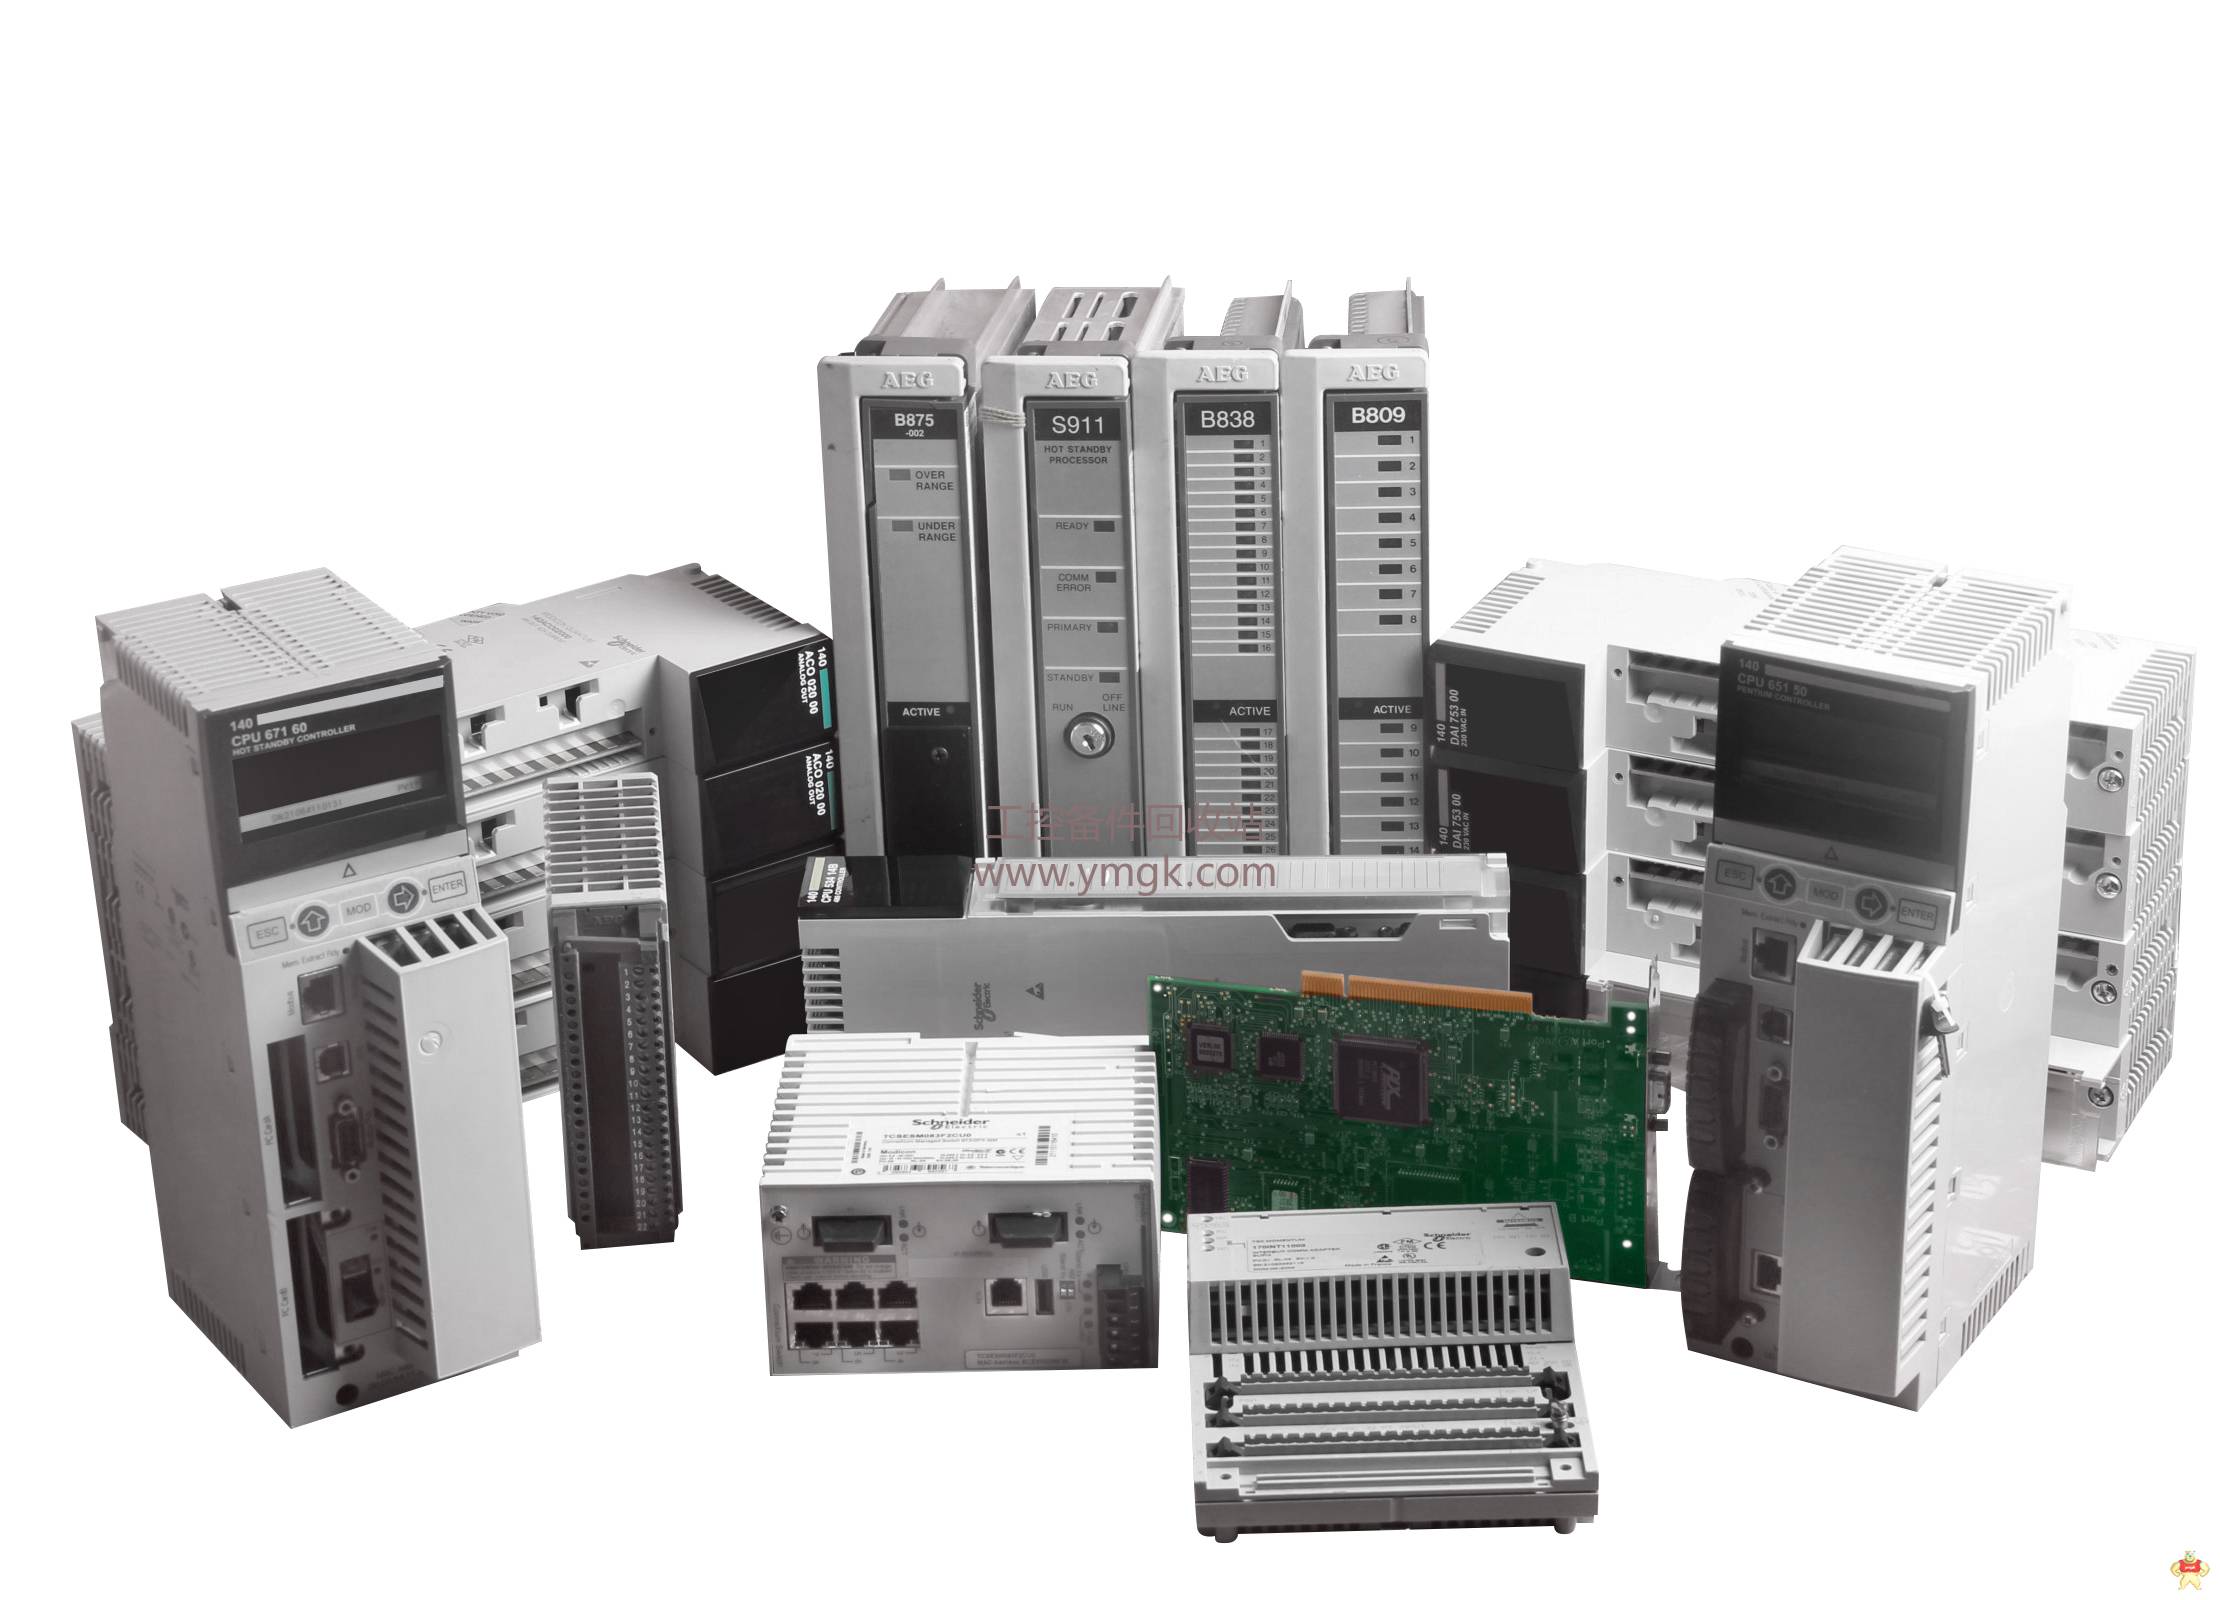 回收ICS trusted系统输入输出模块T8403/T8461/T8431/T8451 T8403,T8403,T8403,T8403,T8403